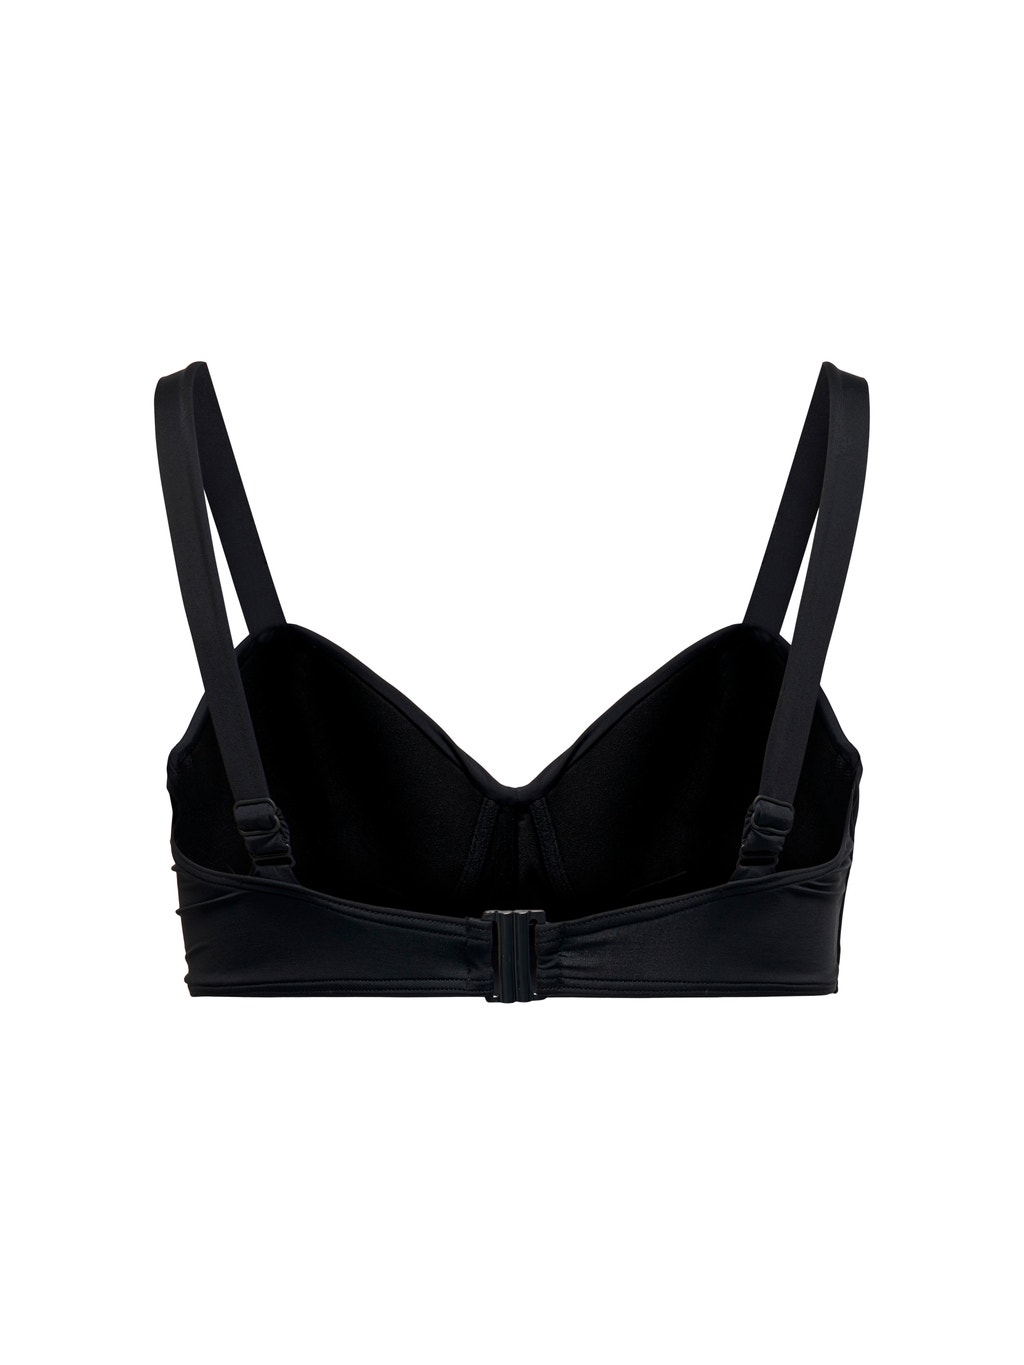 Curvy balconette Bikini top | Black | ONLY®